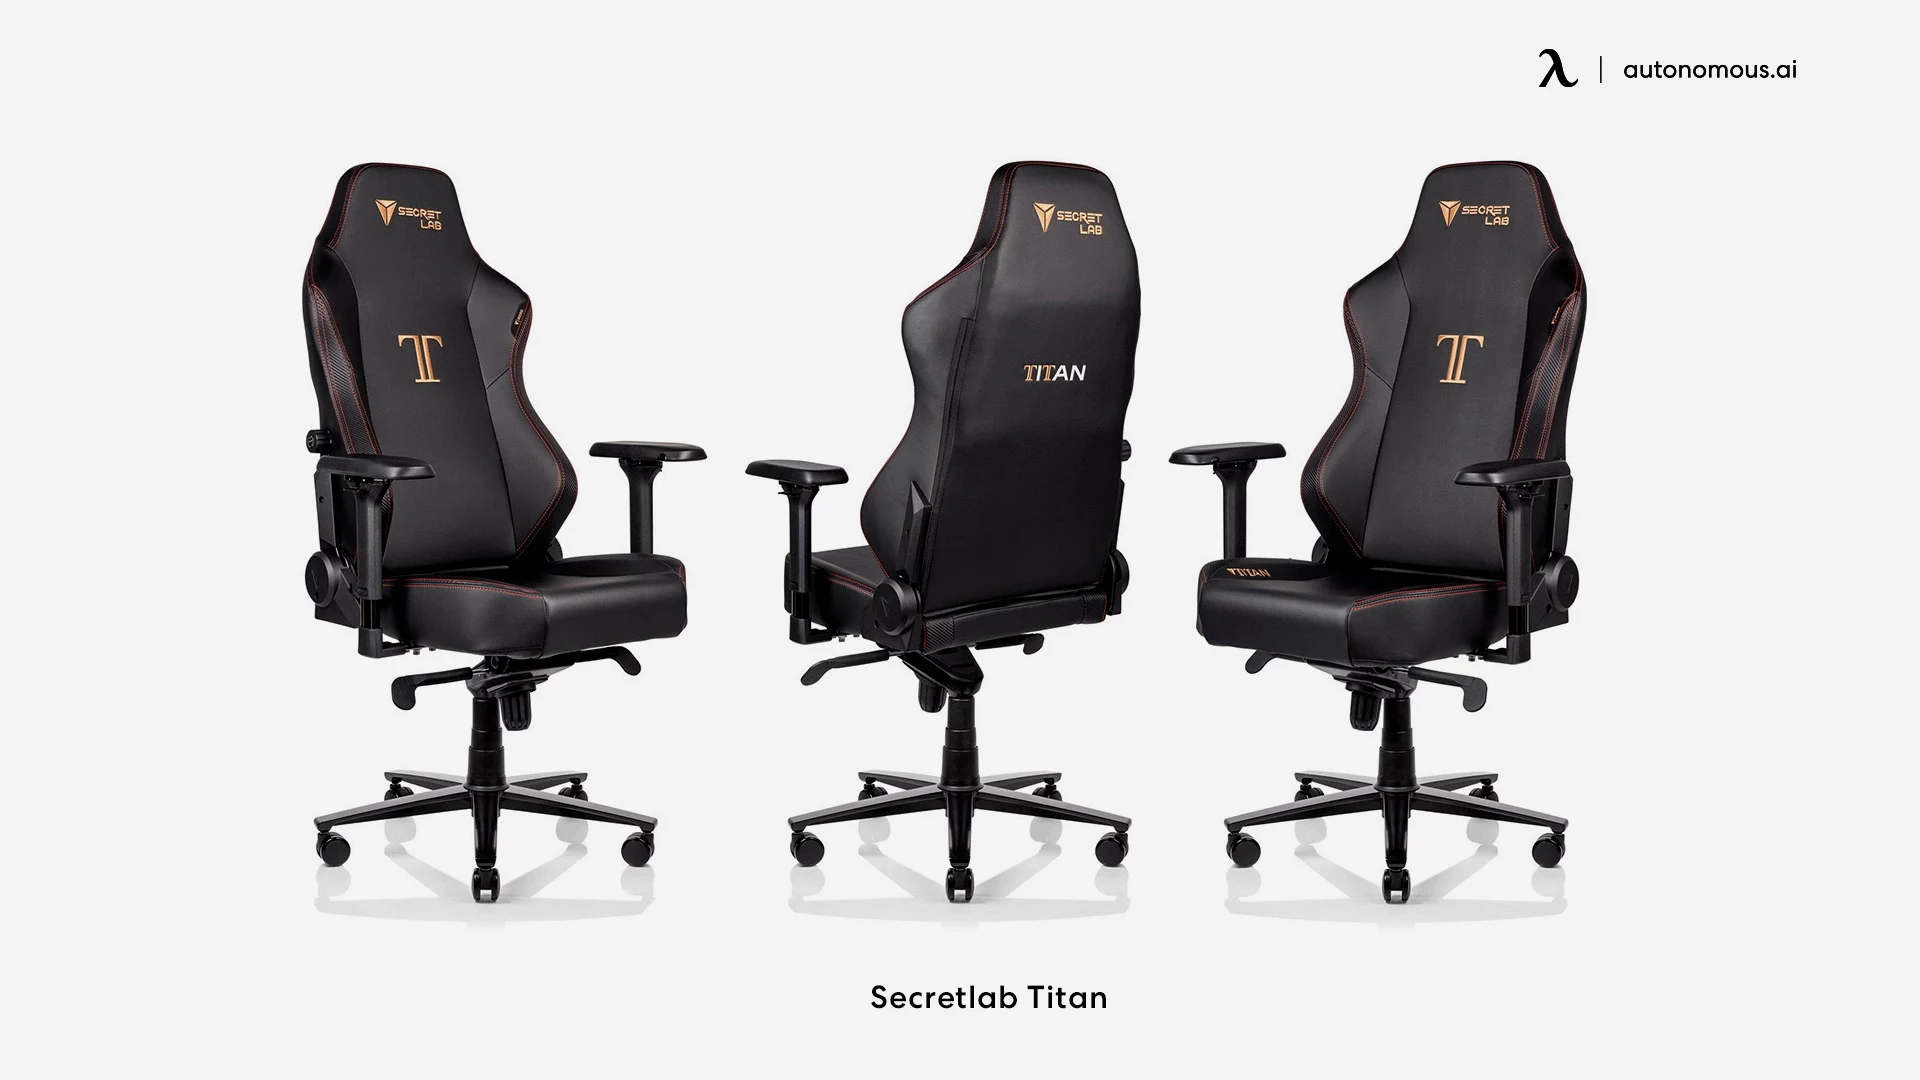 Secretlab Titan XL 2020 black and orange gaming chair